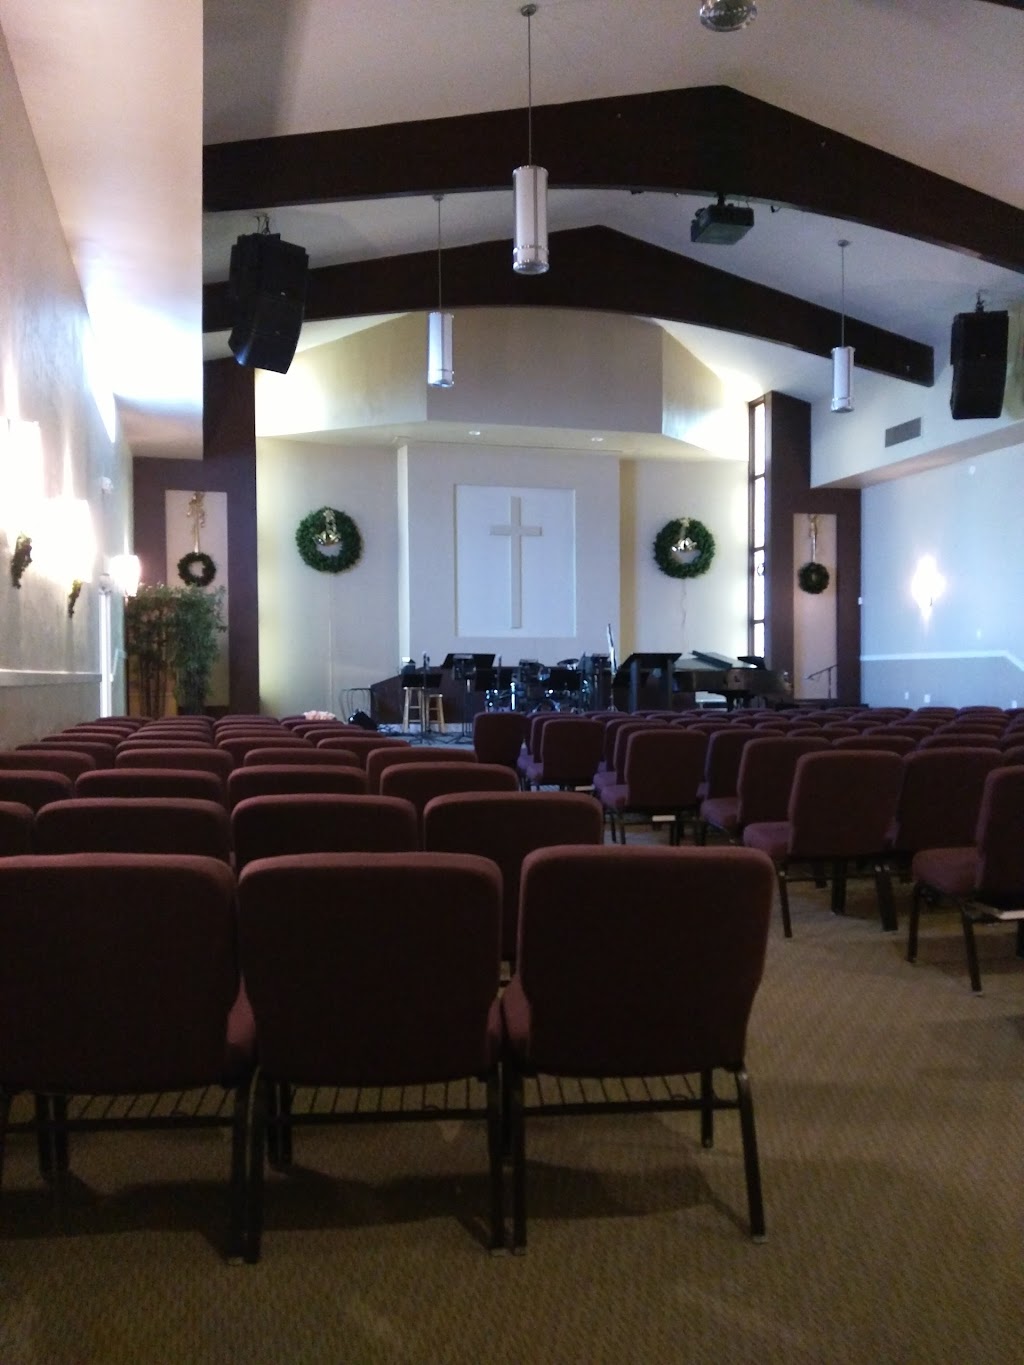 New Life Church | 6115 Fallbrook Ave, Woodland Hills, CA 91367 | Phone: (818) 348-5433